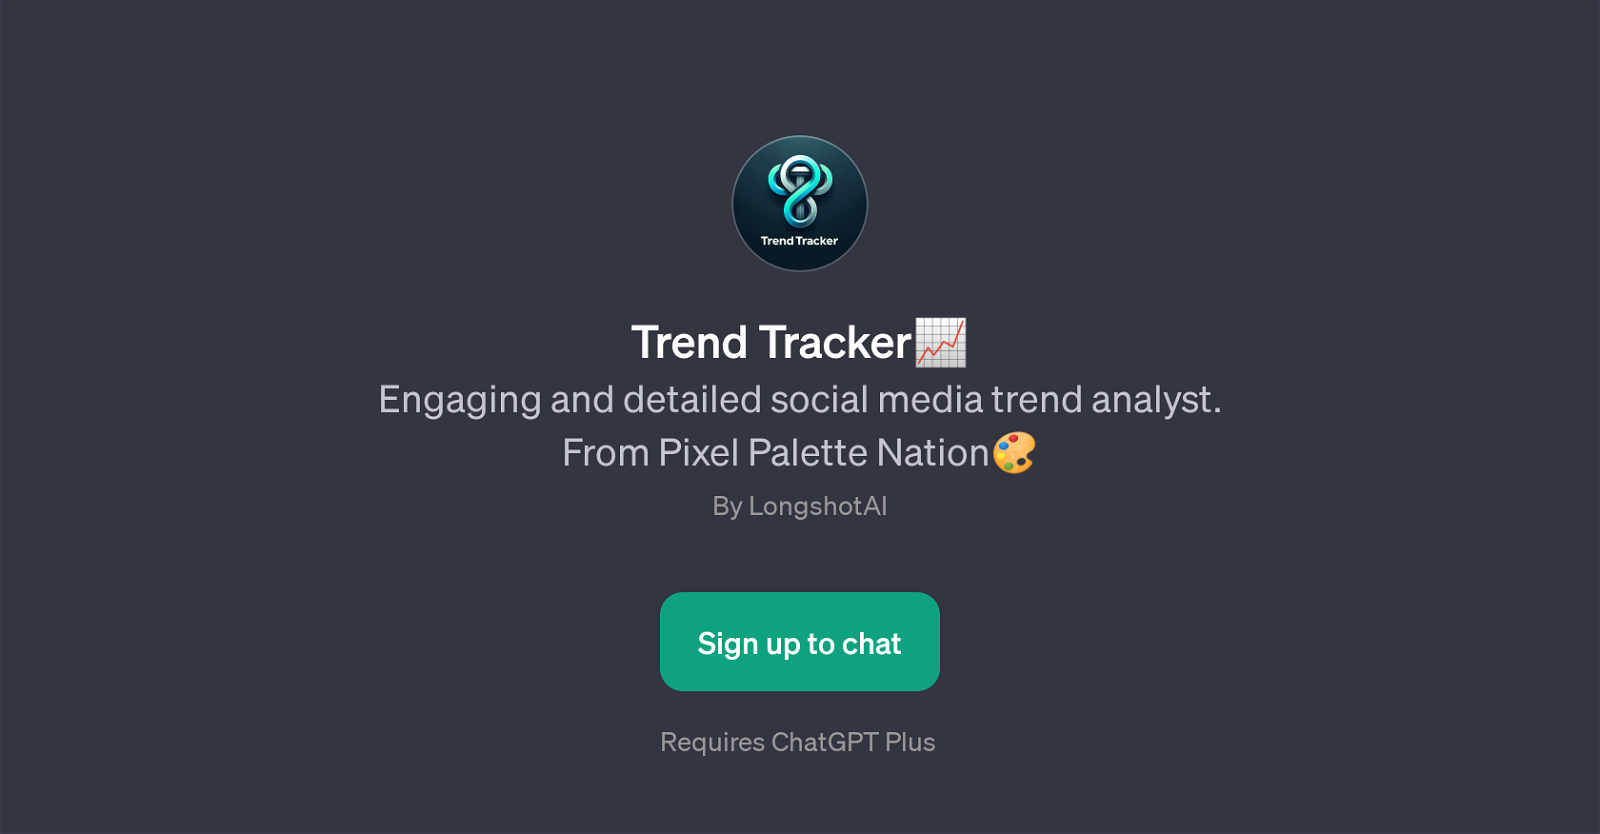 Trend Tracker website